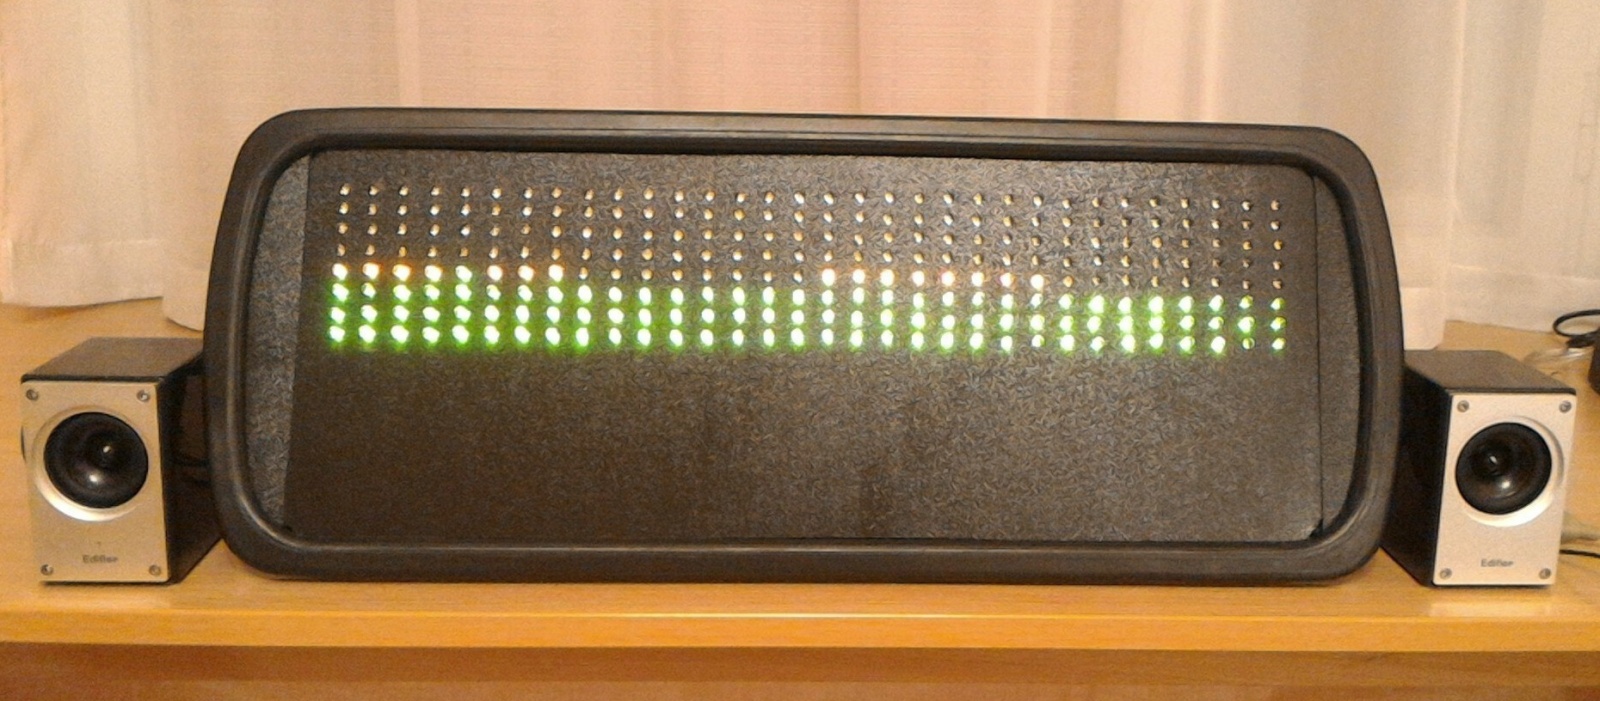 Анализатор-визуализатор спектра аудио сигнала на базе Arduino - 21